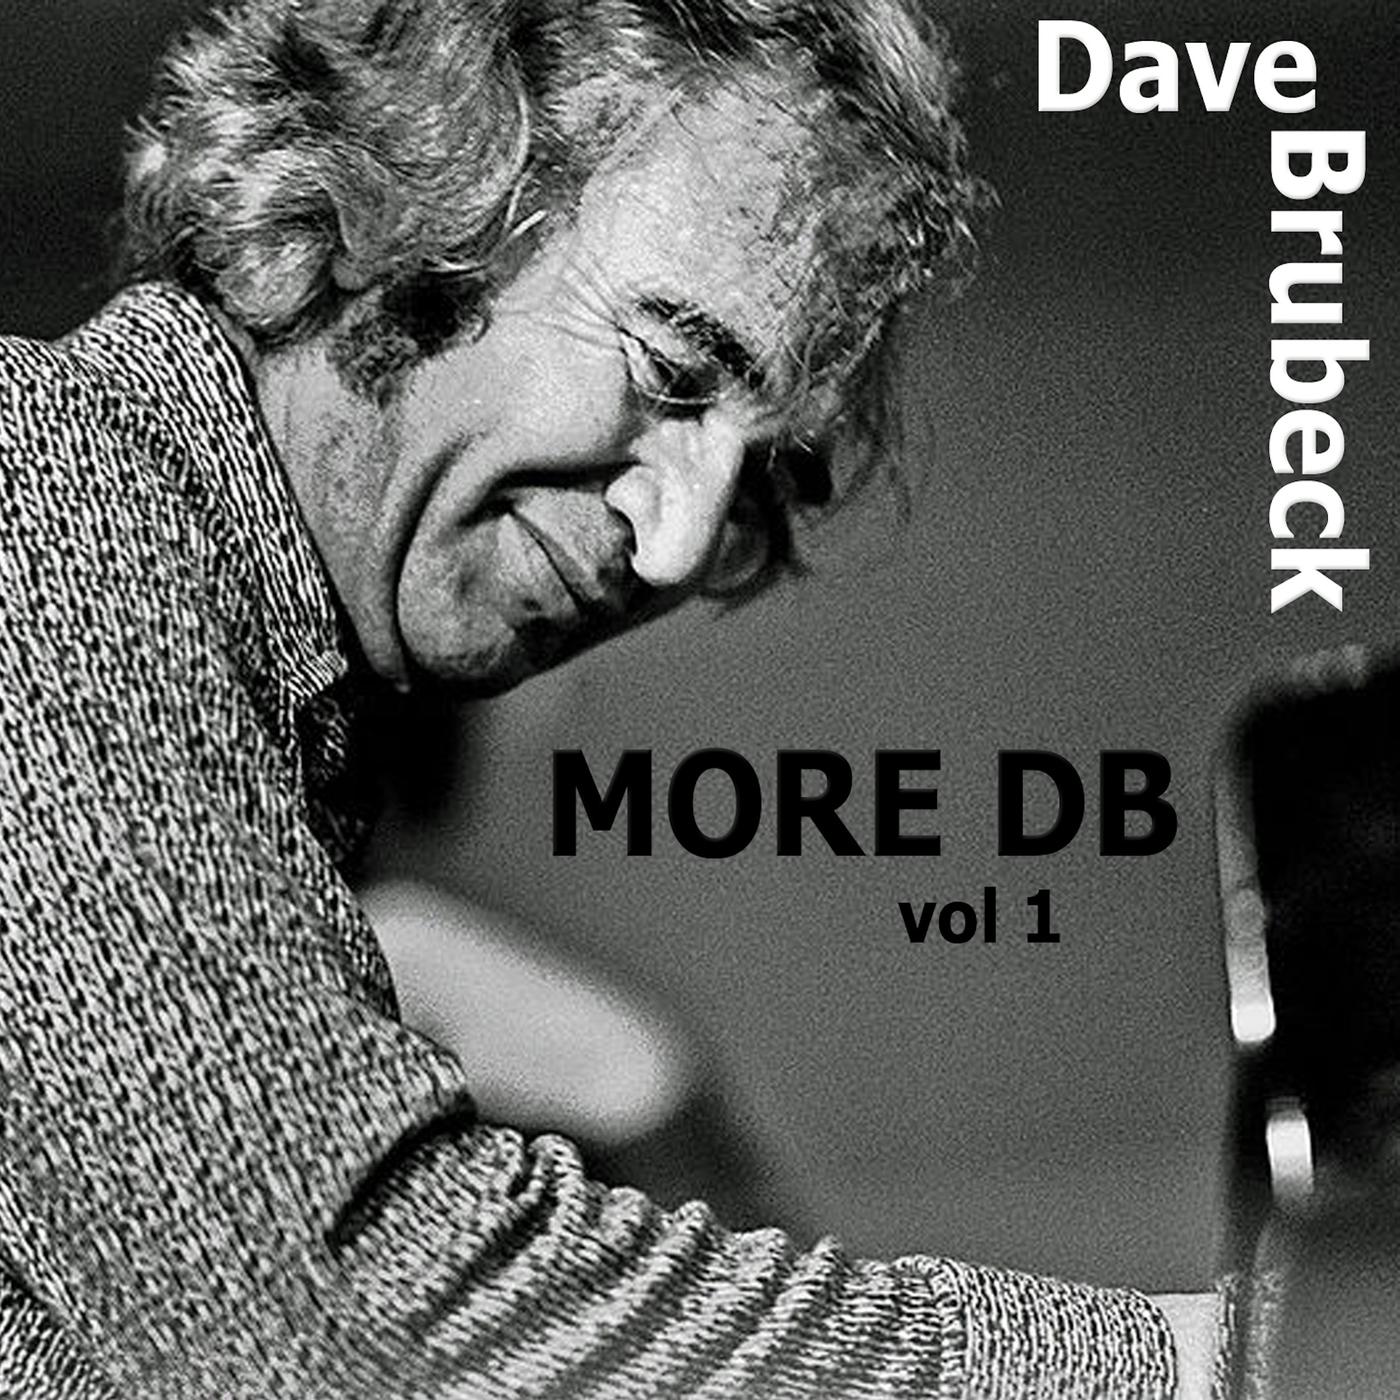 More DB!, Vol. 1